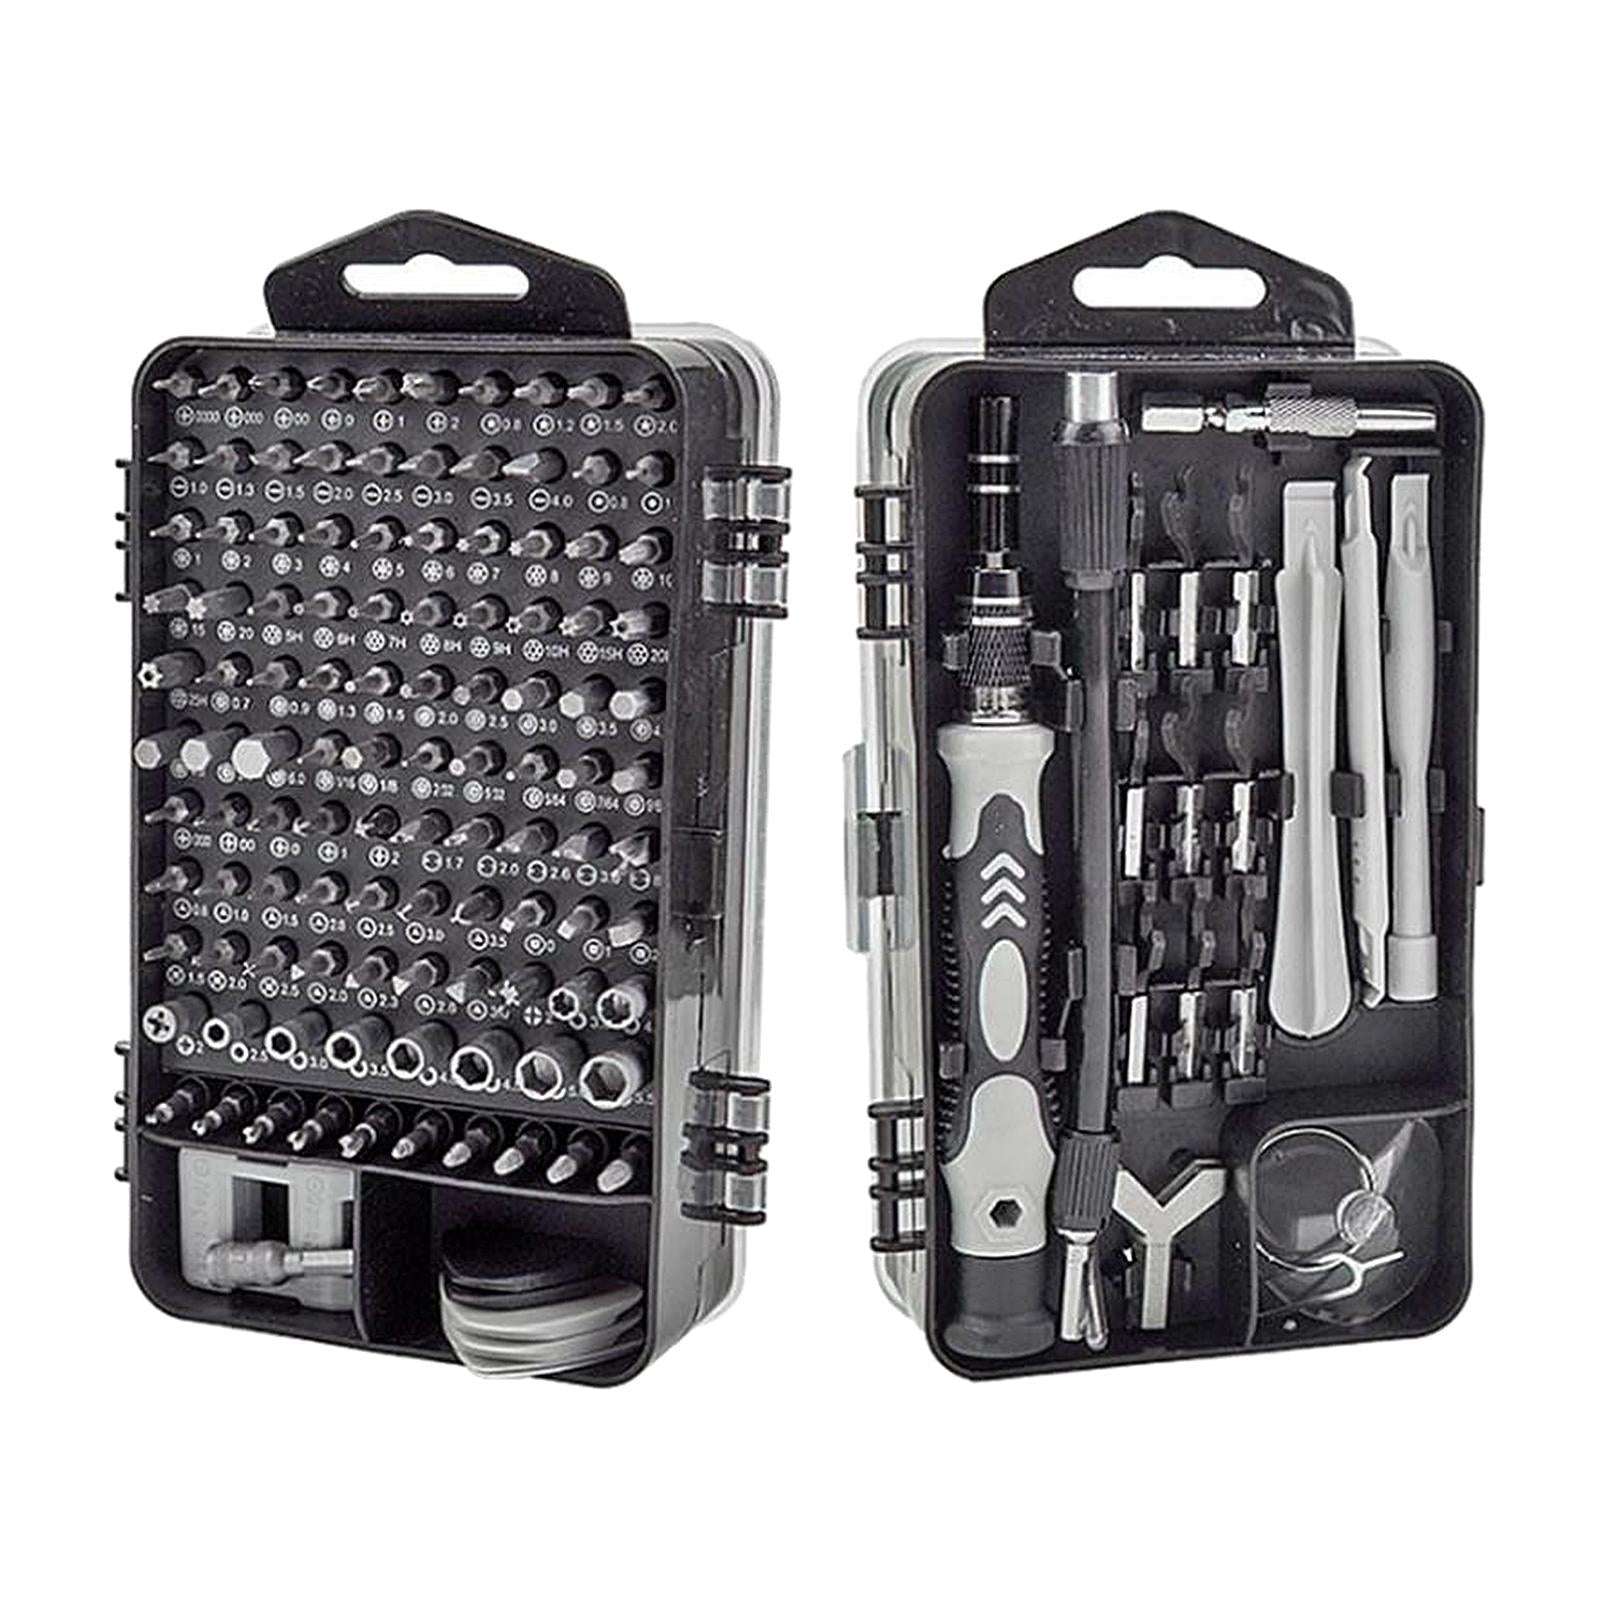 138 in 1 Screwdriver Kit Repair Tool Kits with Case for Cellphone DIY Laptop Black